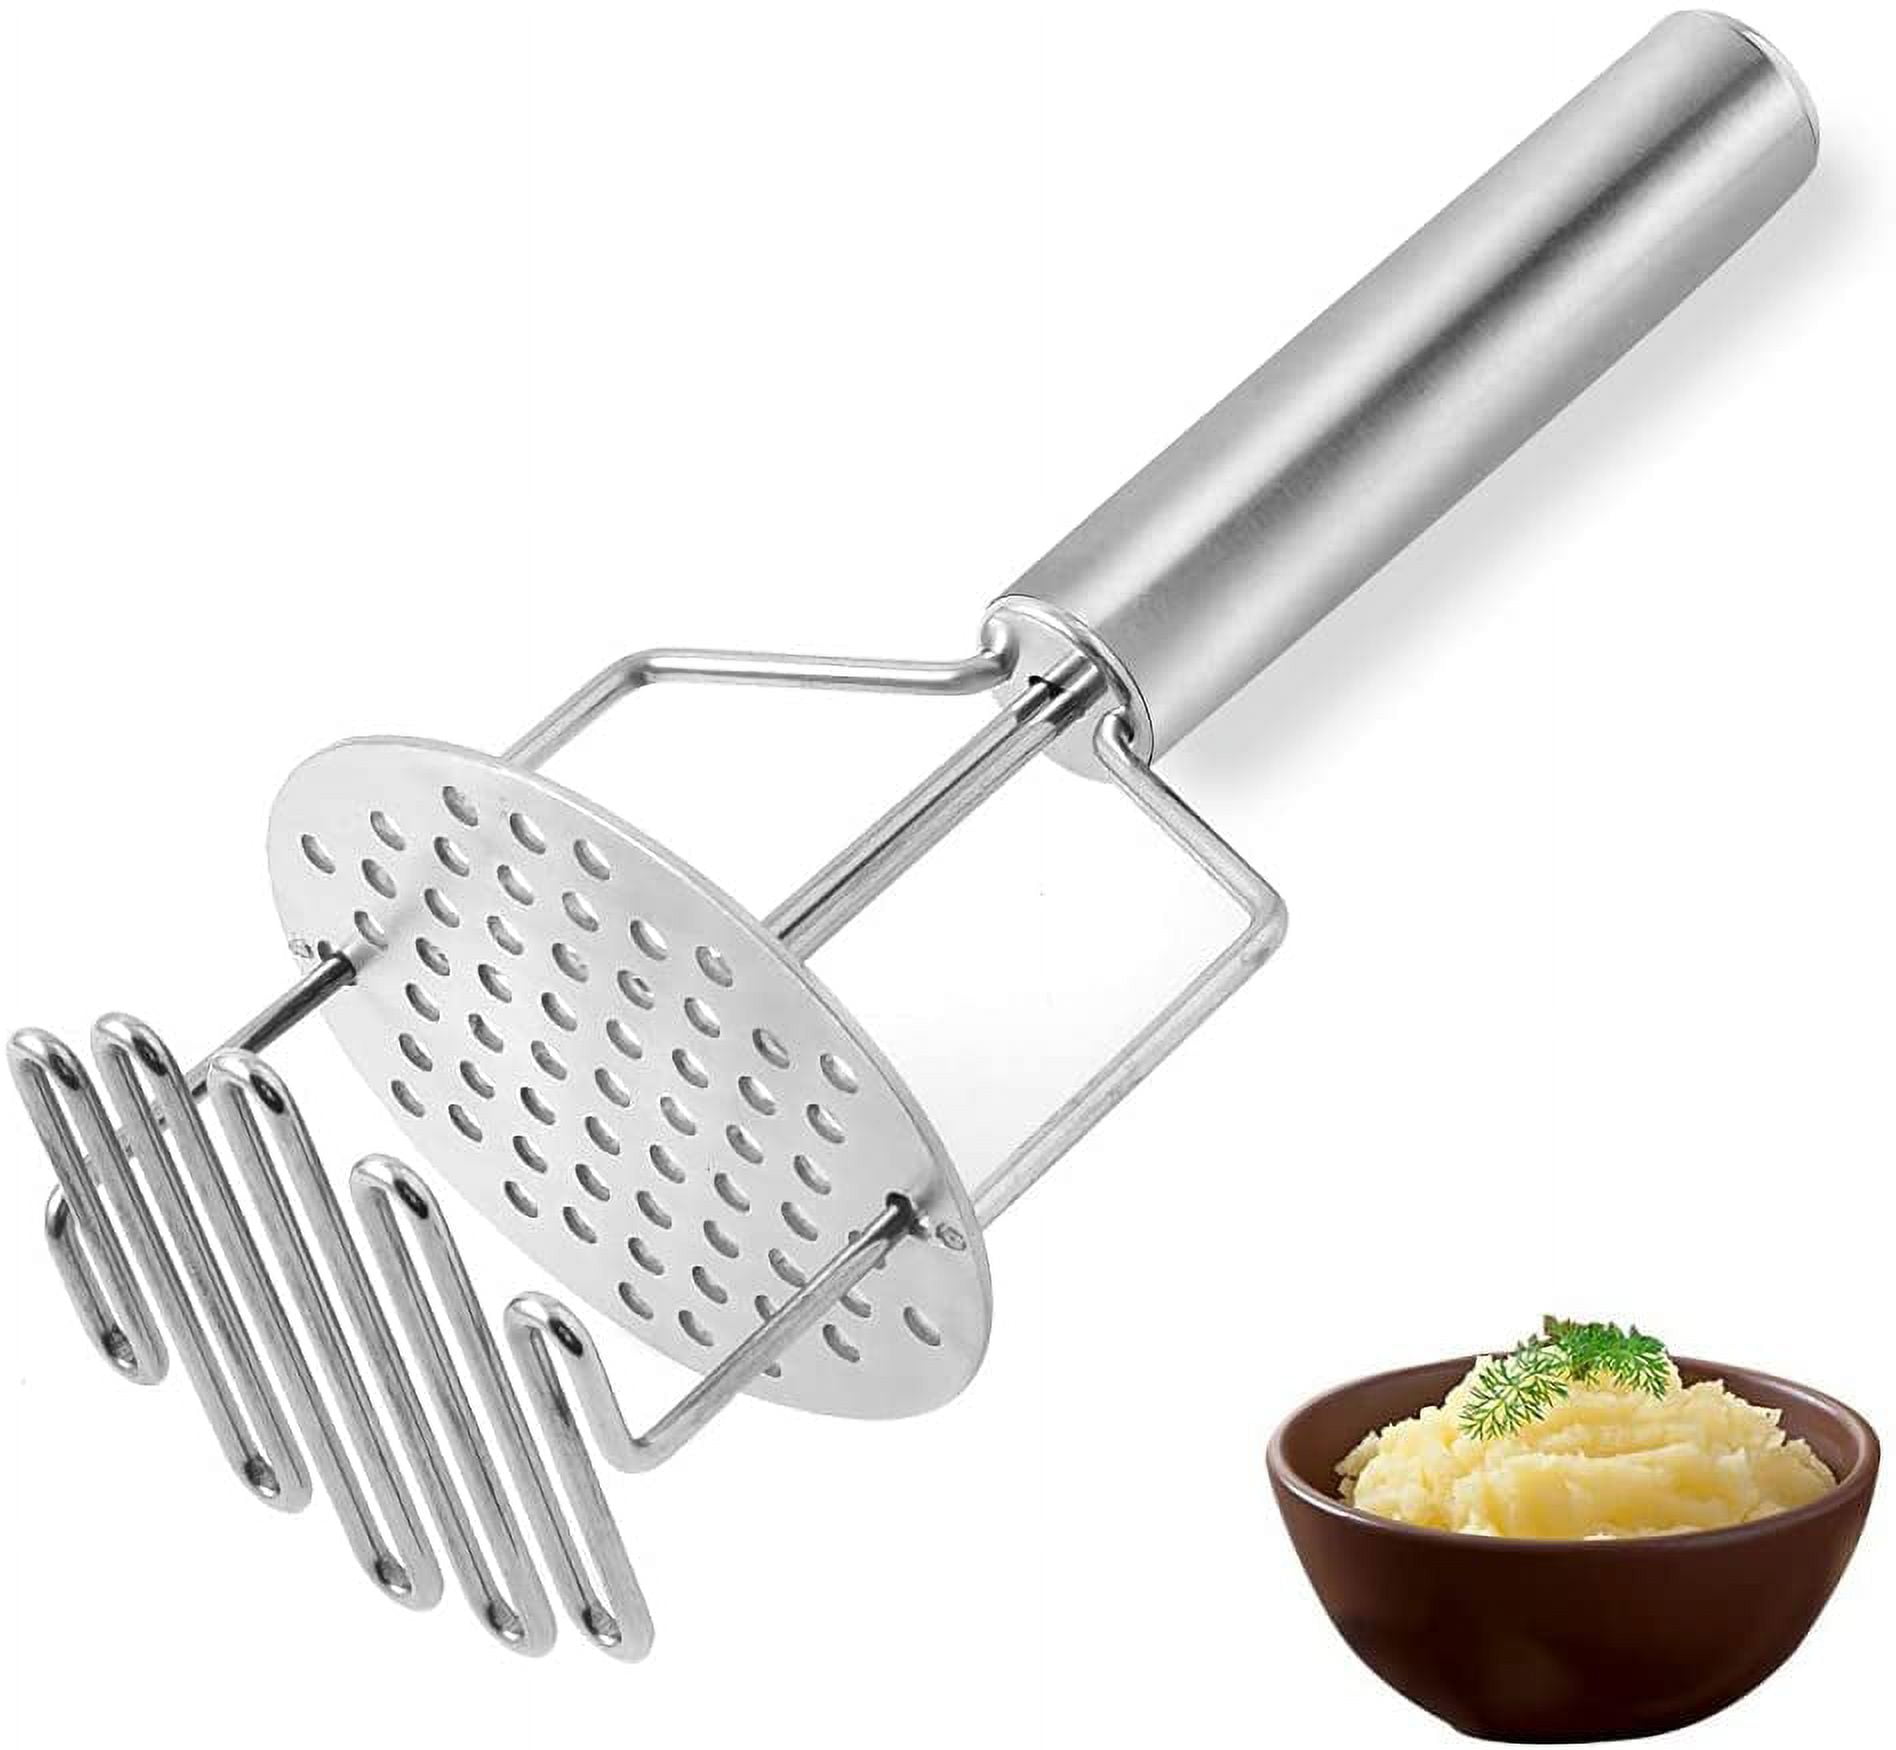 Idoker Potato Masher Stainless Steel Potato Ricer Potato Masher Hand Masher Kitchen Tool Ricer for Mashed Motatoes Dual-Press Design